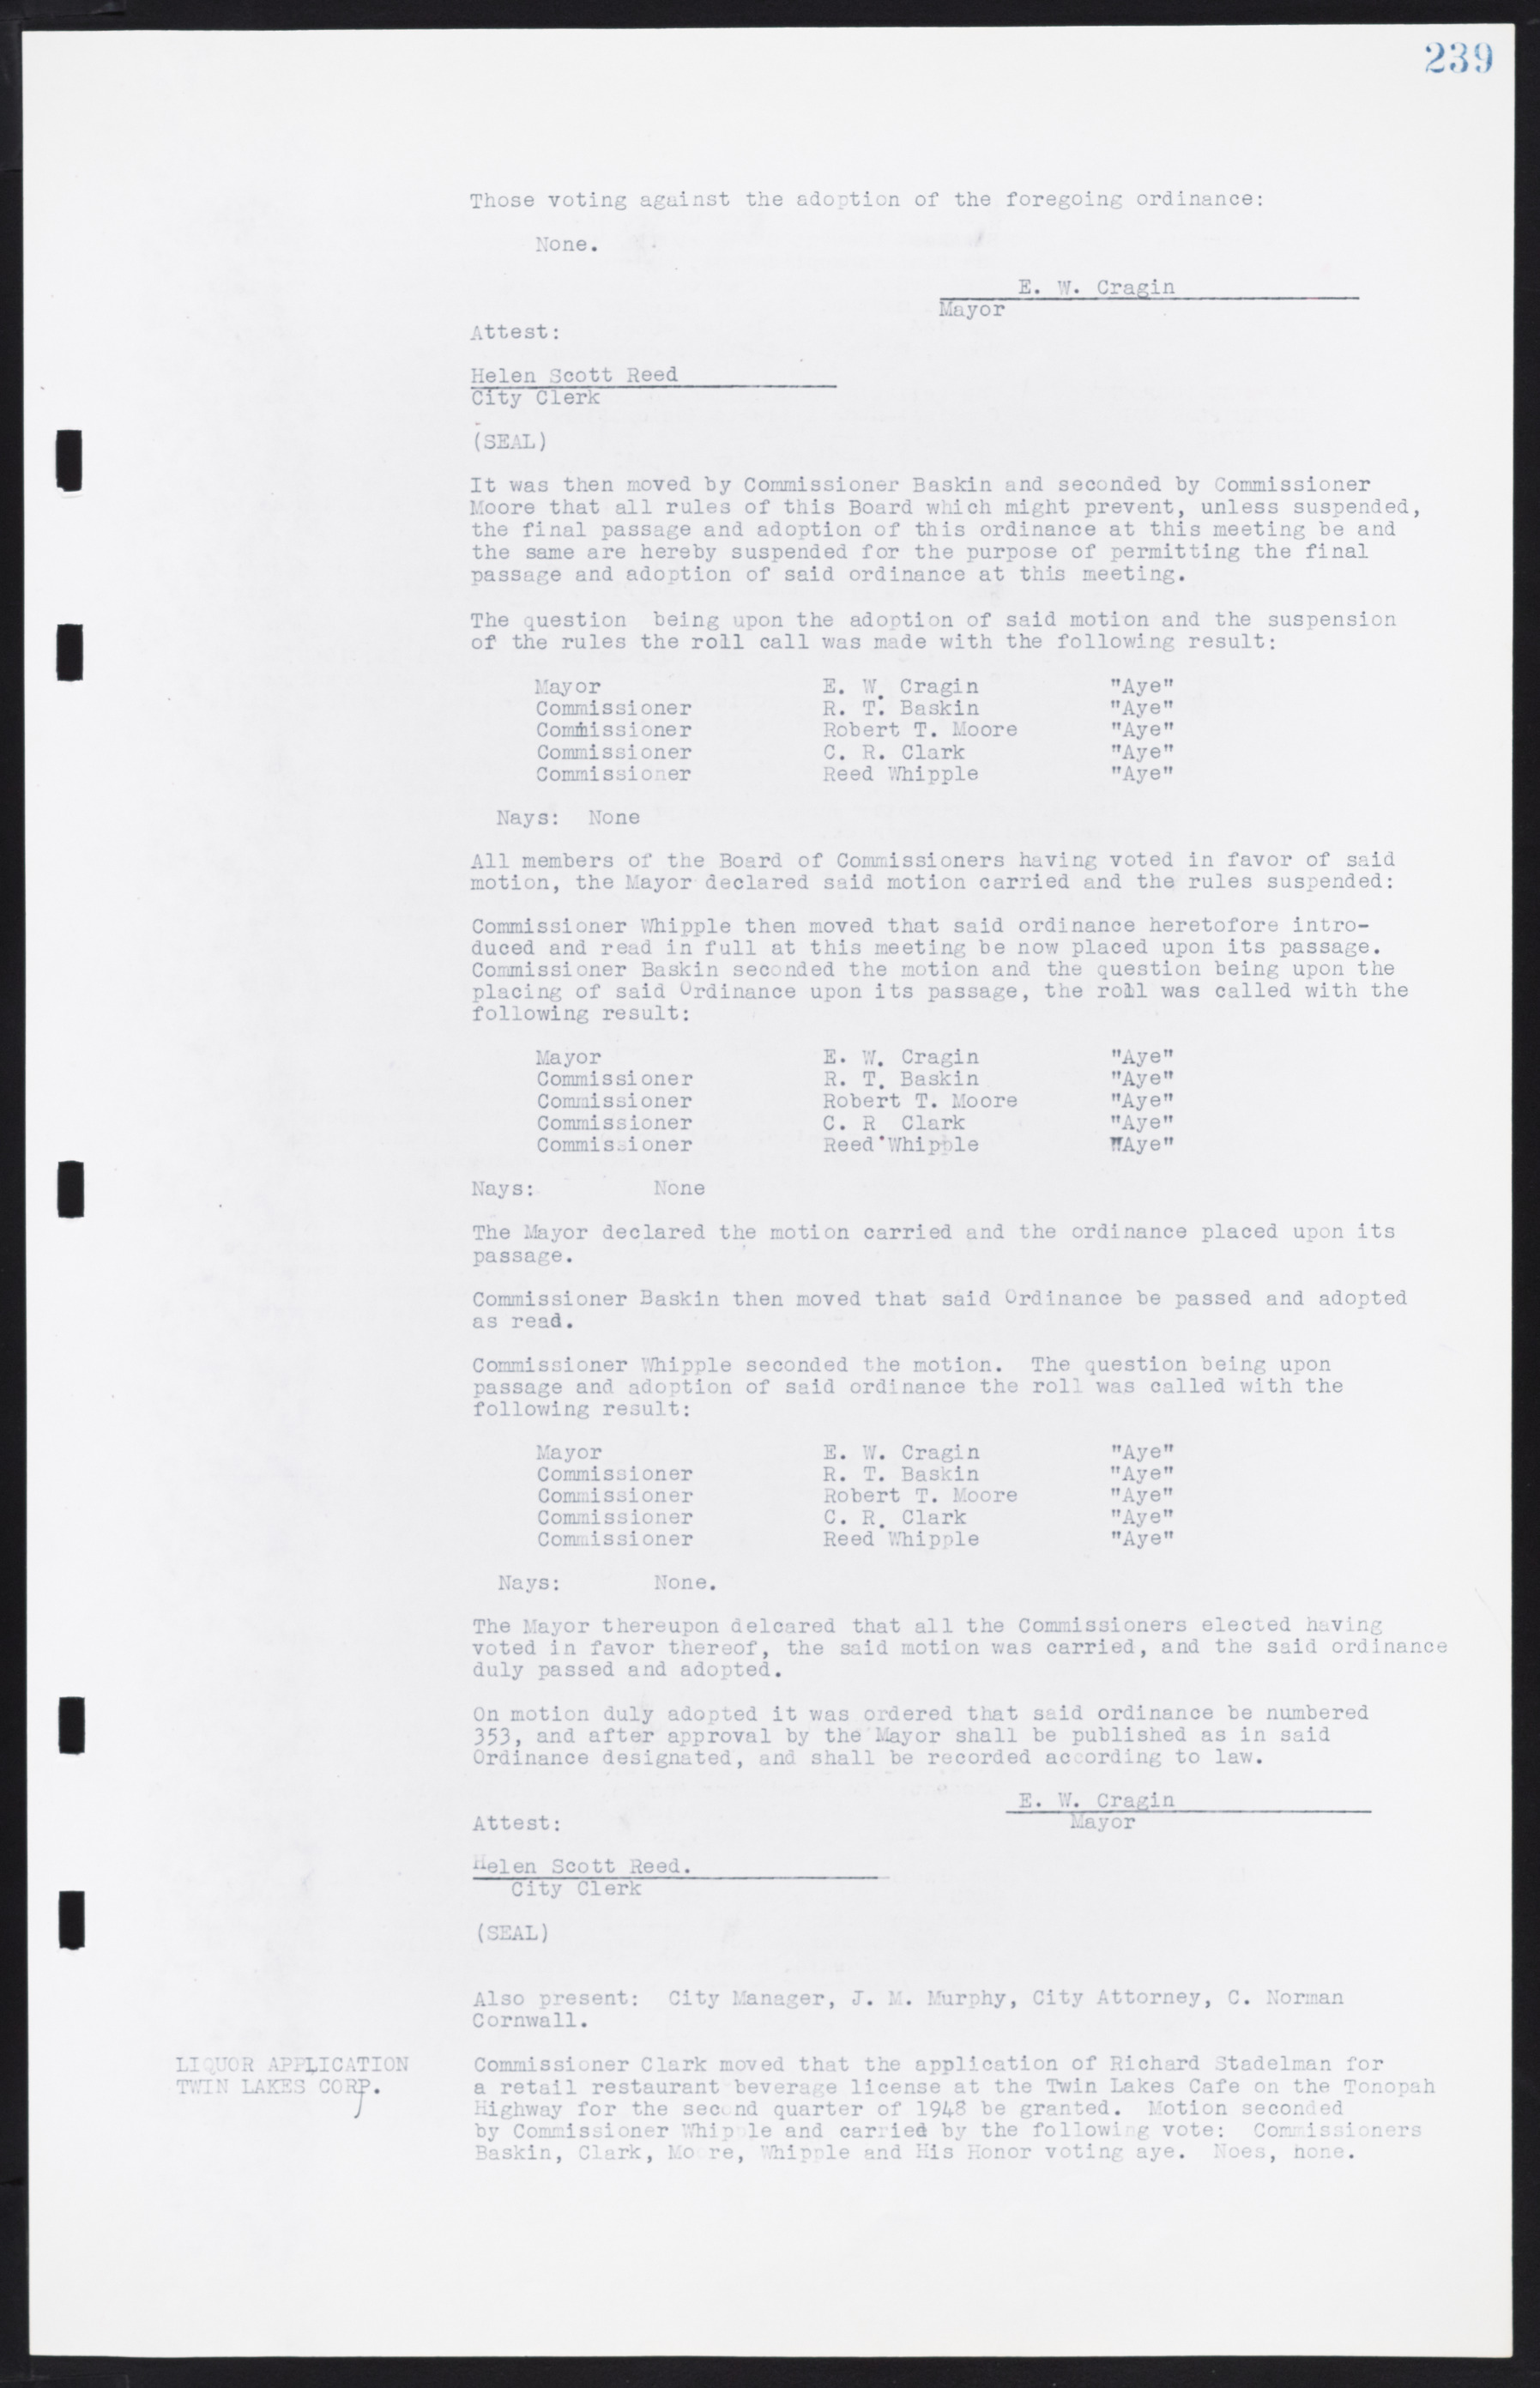 Las Vegas City Commission Minutes, January 7, 1947 to October 26, 1949, lvc000006-261